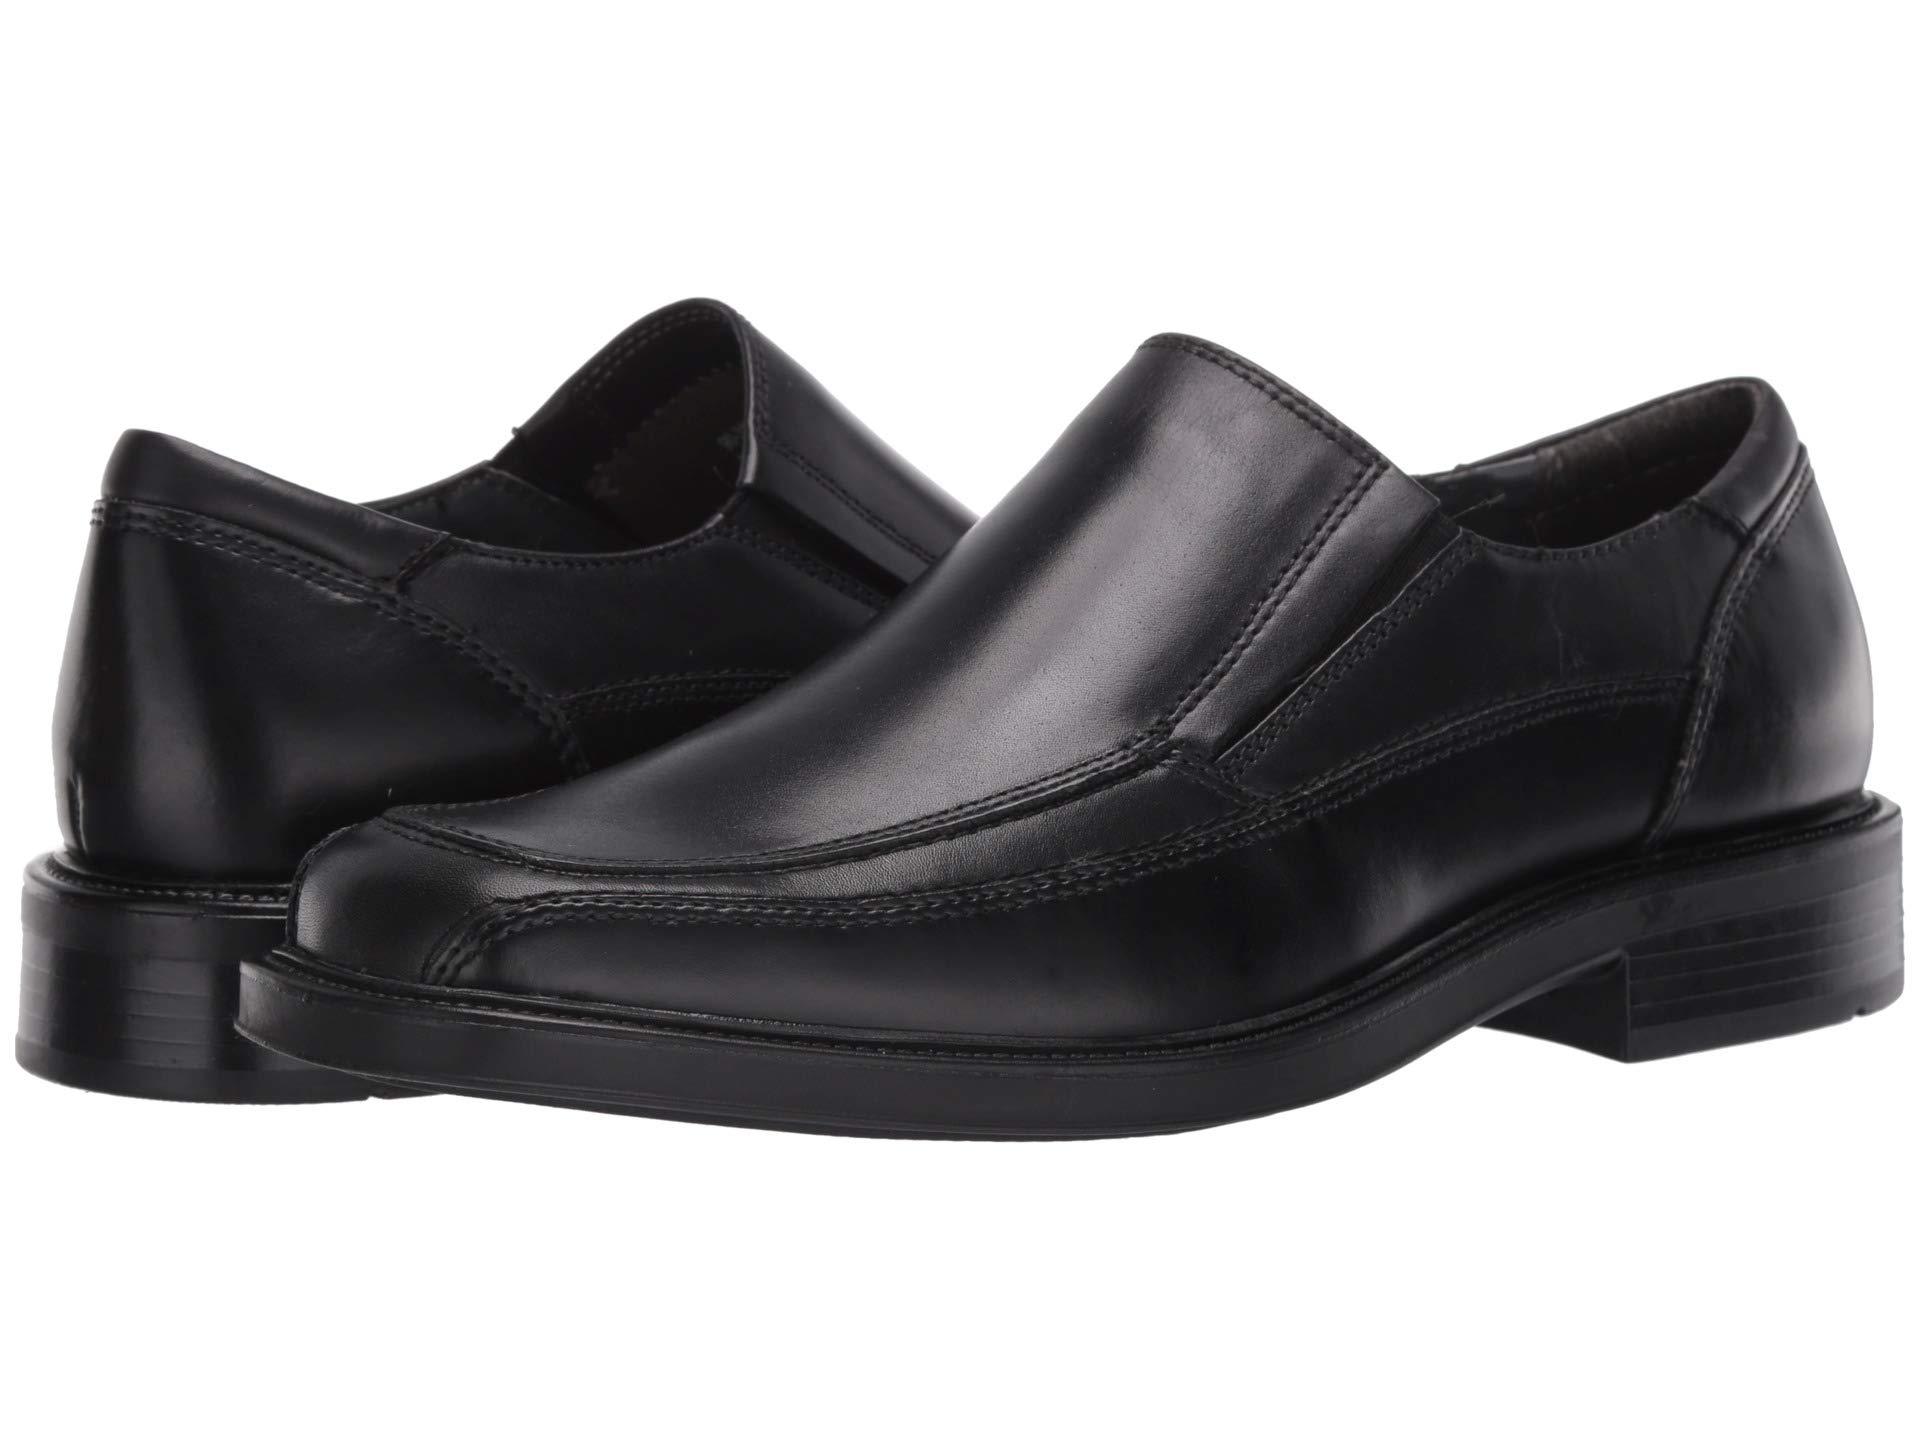 Dockers Rubber Proposal Moc Toe Loafer in Black for Men - Lyst